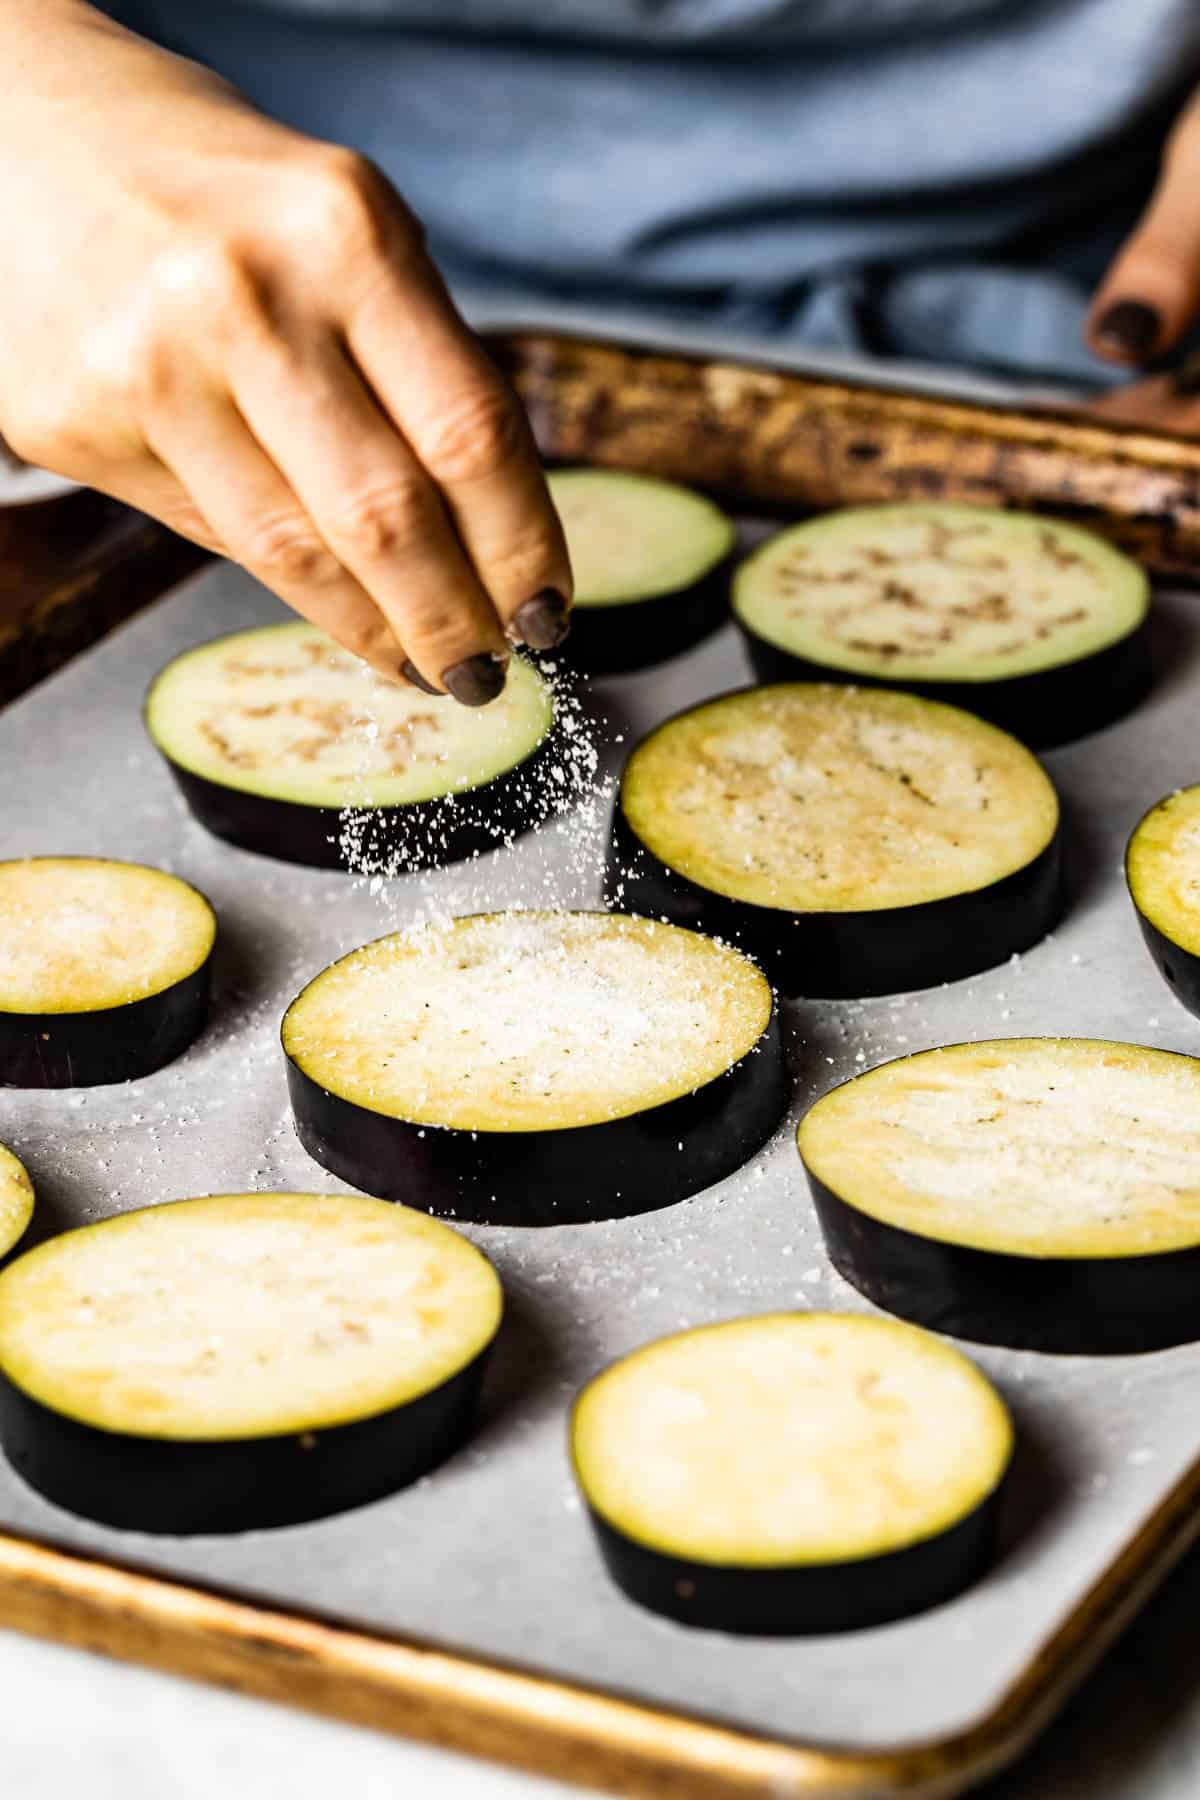 How To Salt Eggplant